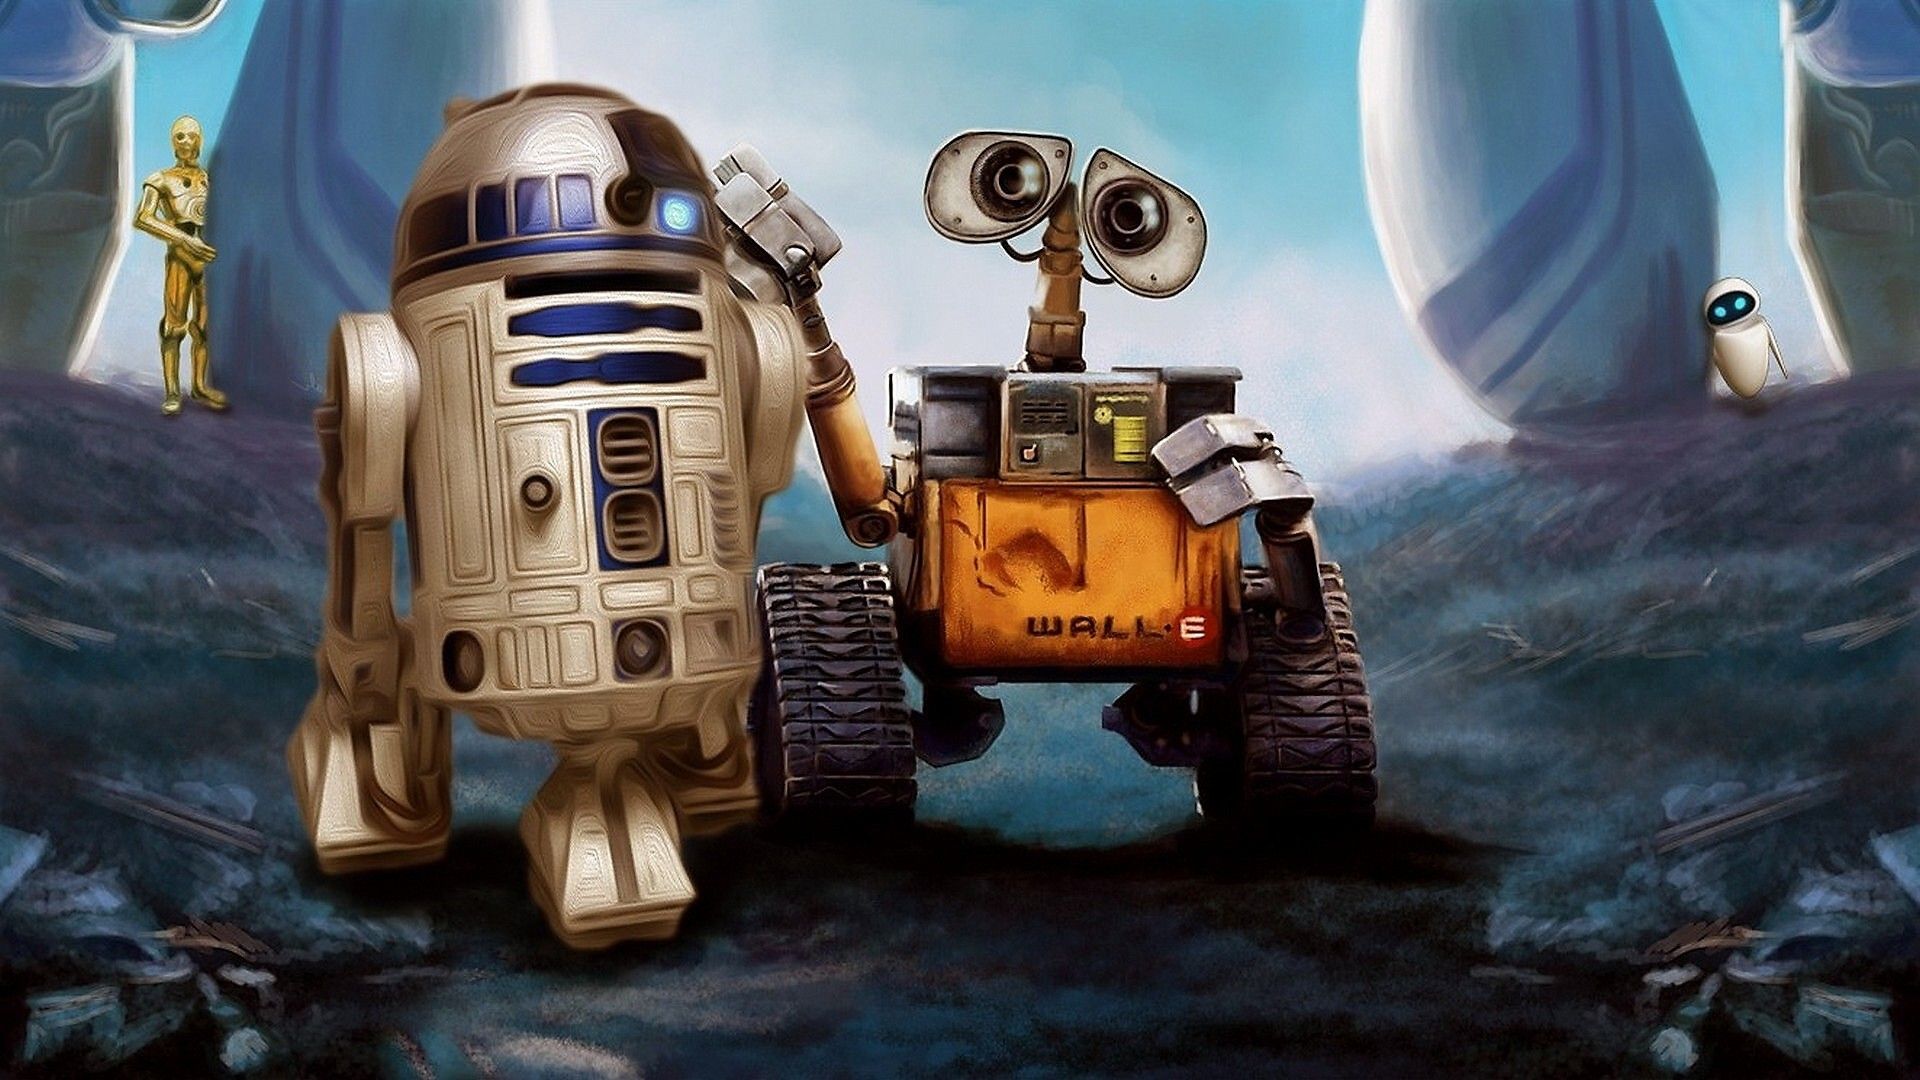 #crossover, #Pixar Animation Studios, #robot, #R2 D2